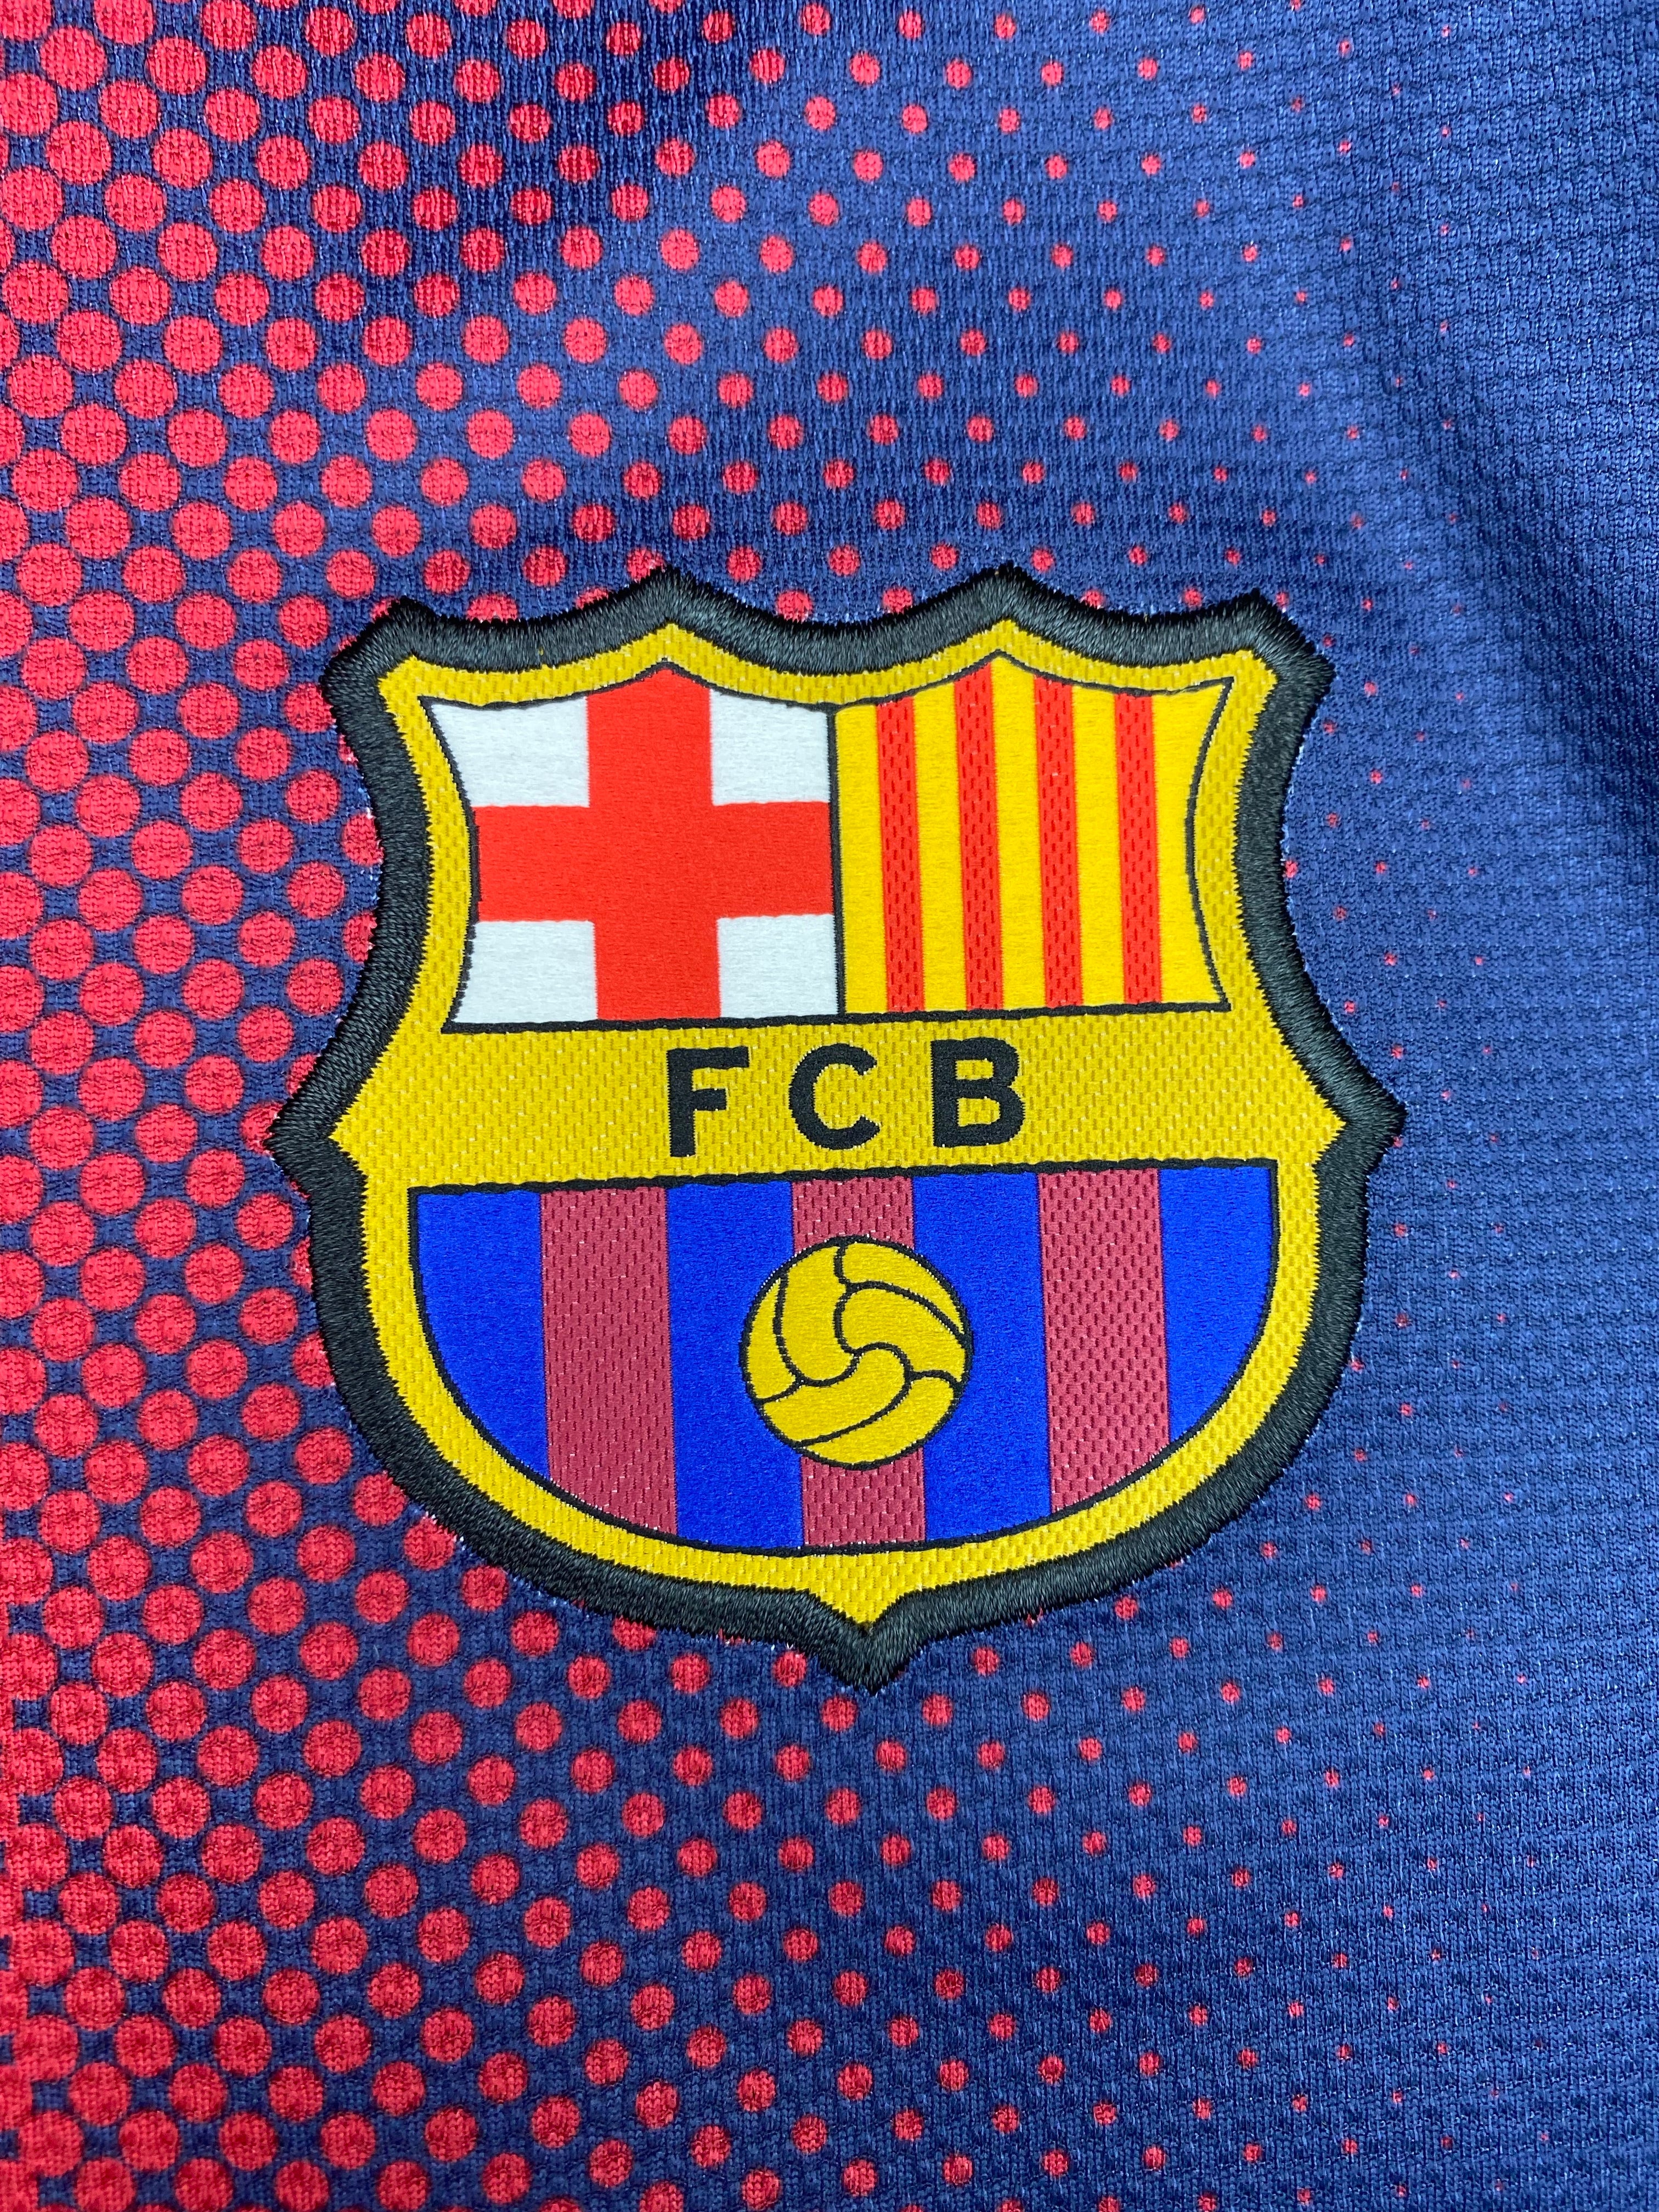 2012/13 Barcelona Home L/S Shirt (M) 9/10